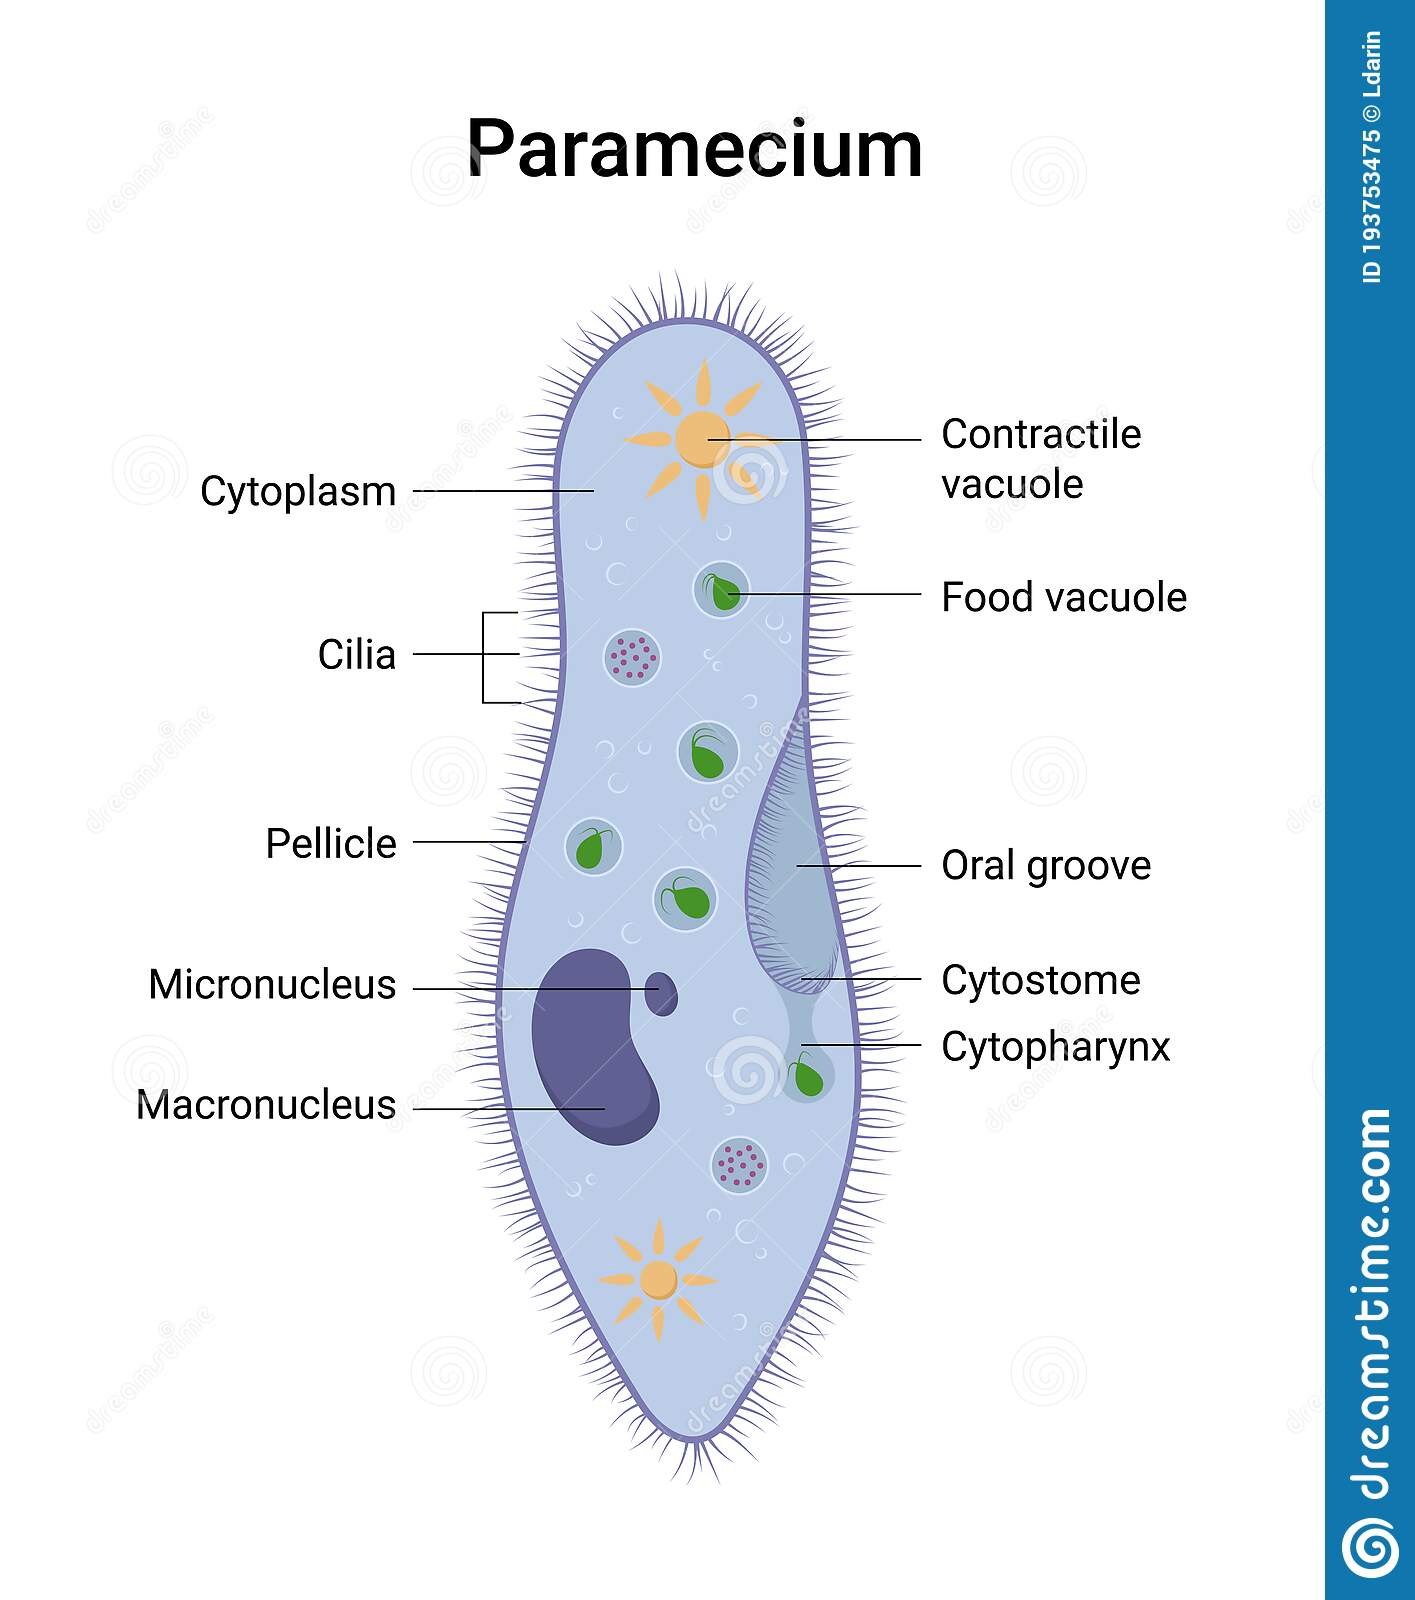 <ul><li><p>Eukaryotic</p></li><li><p>Some can cause disease in humans</p></li><li><p>Very variable:</p></li><li><p>Some are plant-like, animal-like or fungi-like</p></li></ul>